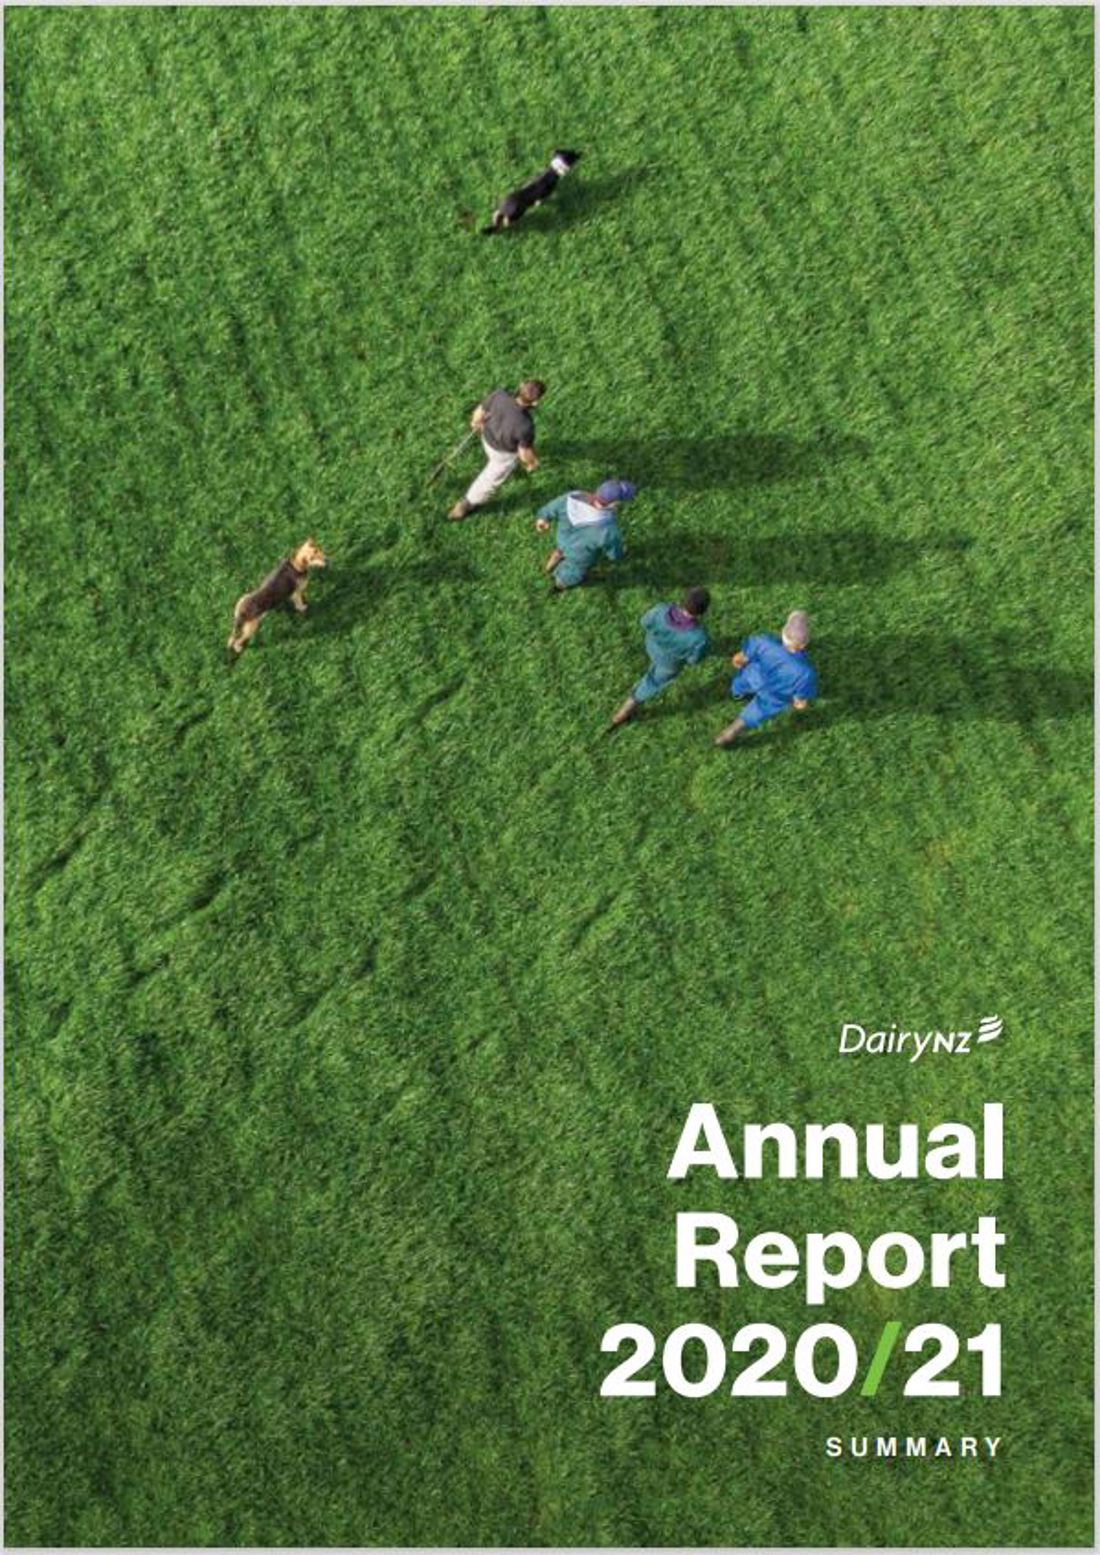 Annual Report 2020 2021 Summary Image